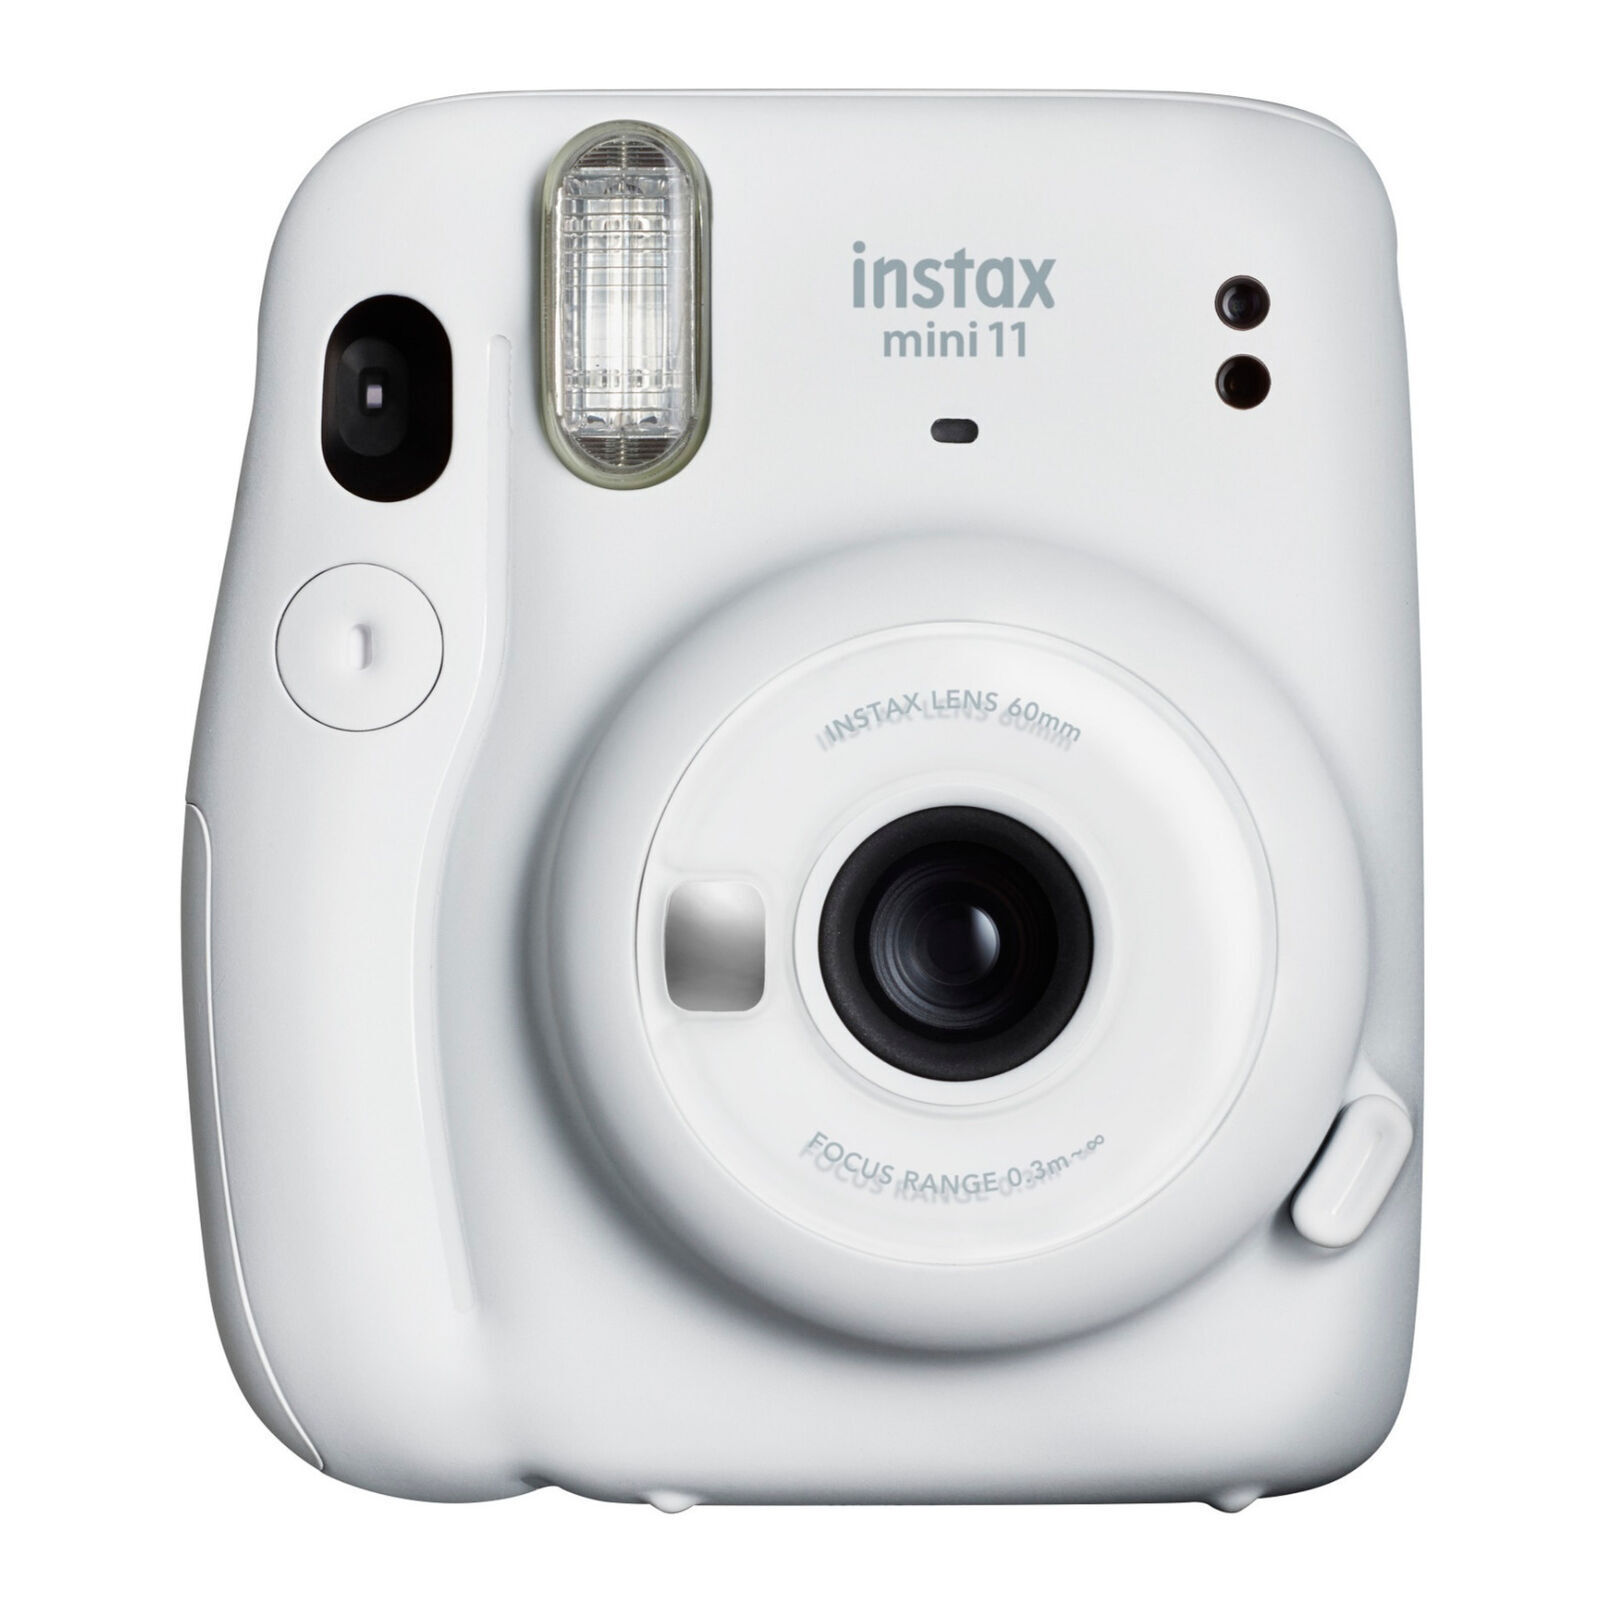 herten Partina City Koken Fujifilm Instax Mini 11 Instant Film Camera - Ice White for sale online |  eBay